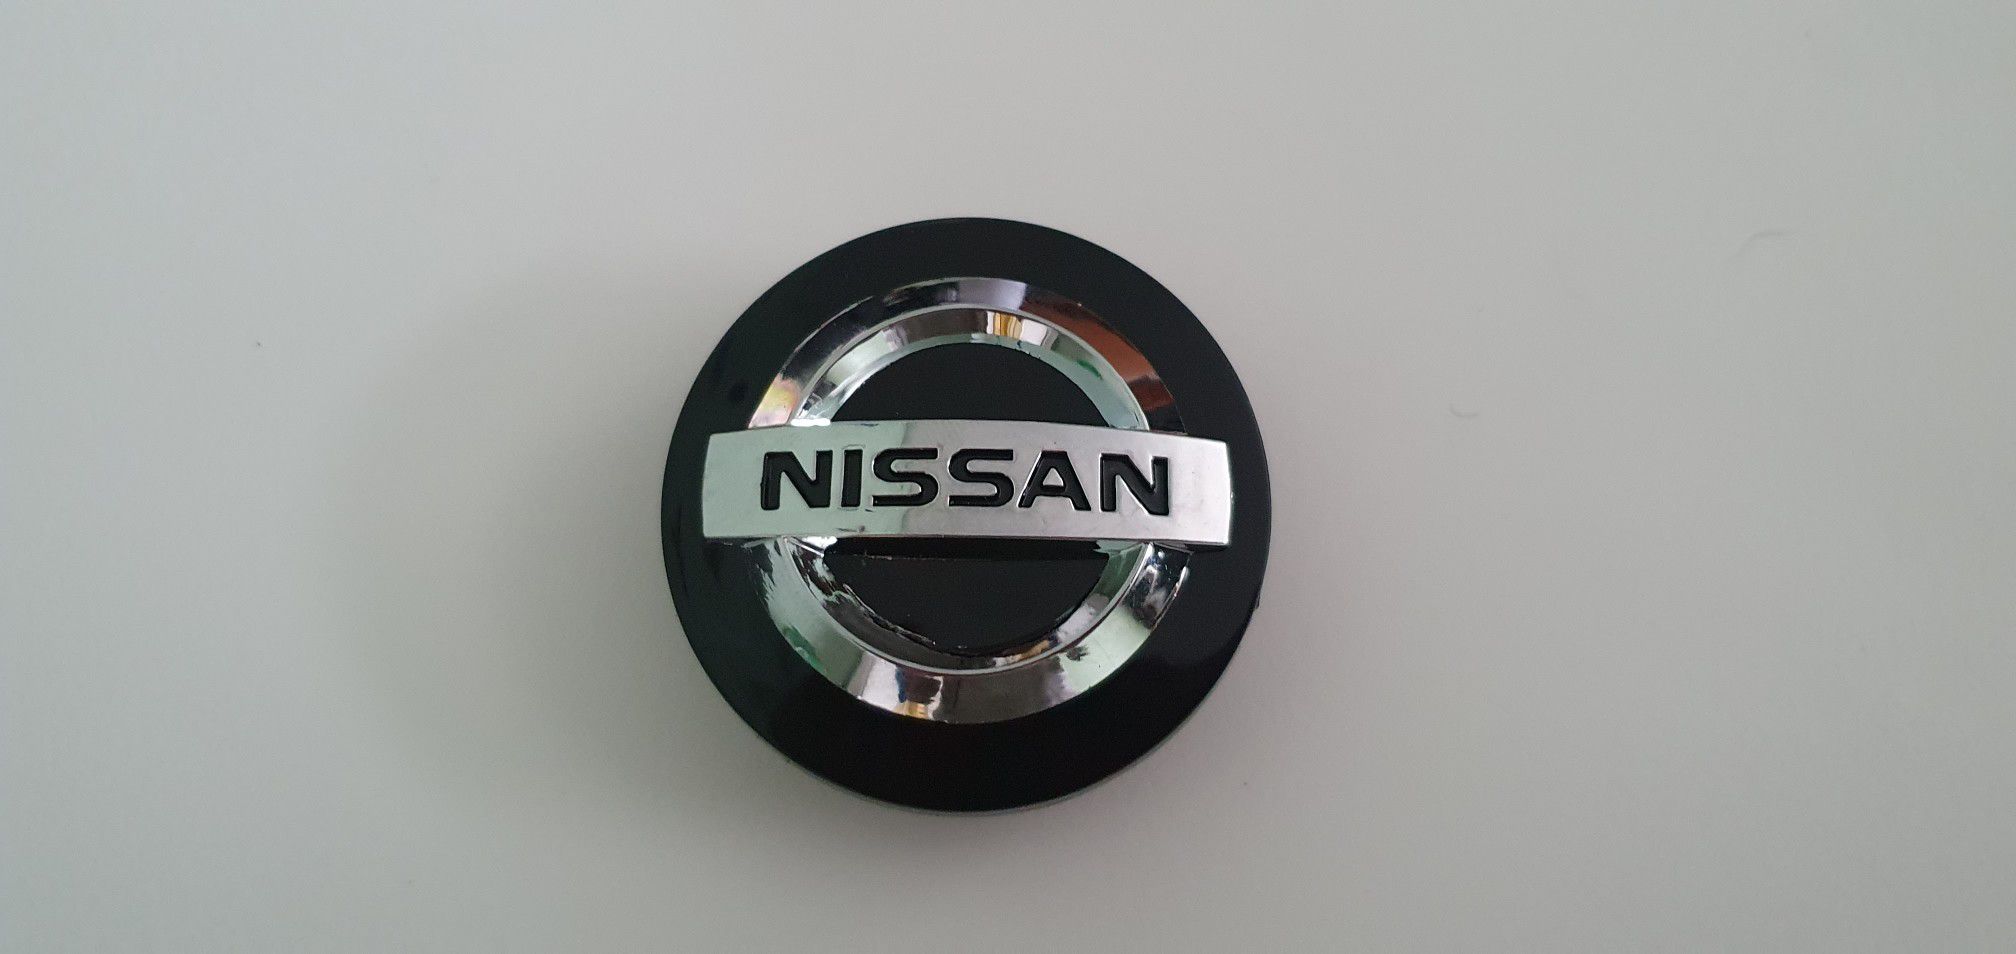 Nissan Wheel center cap